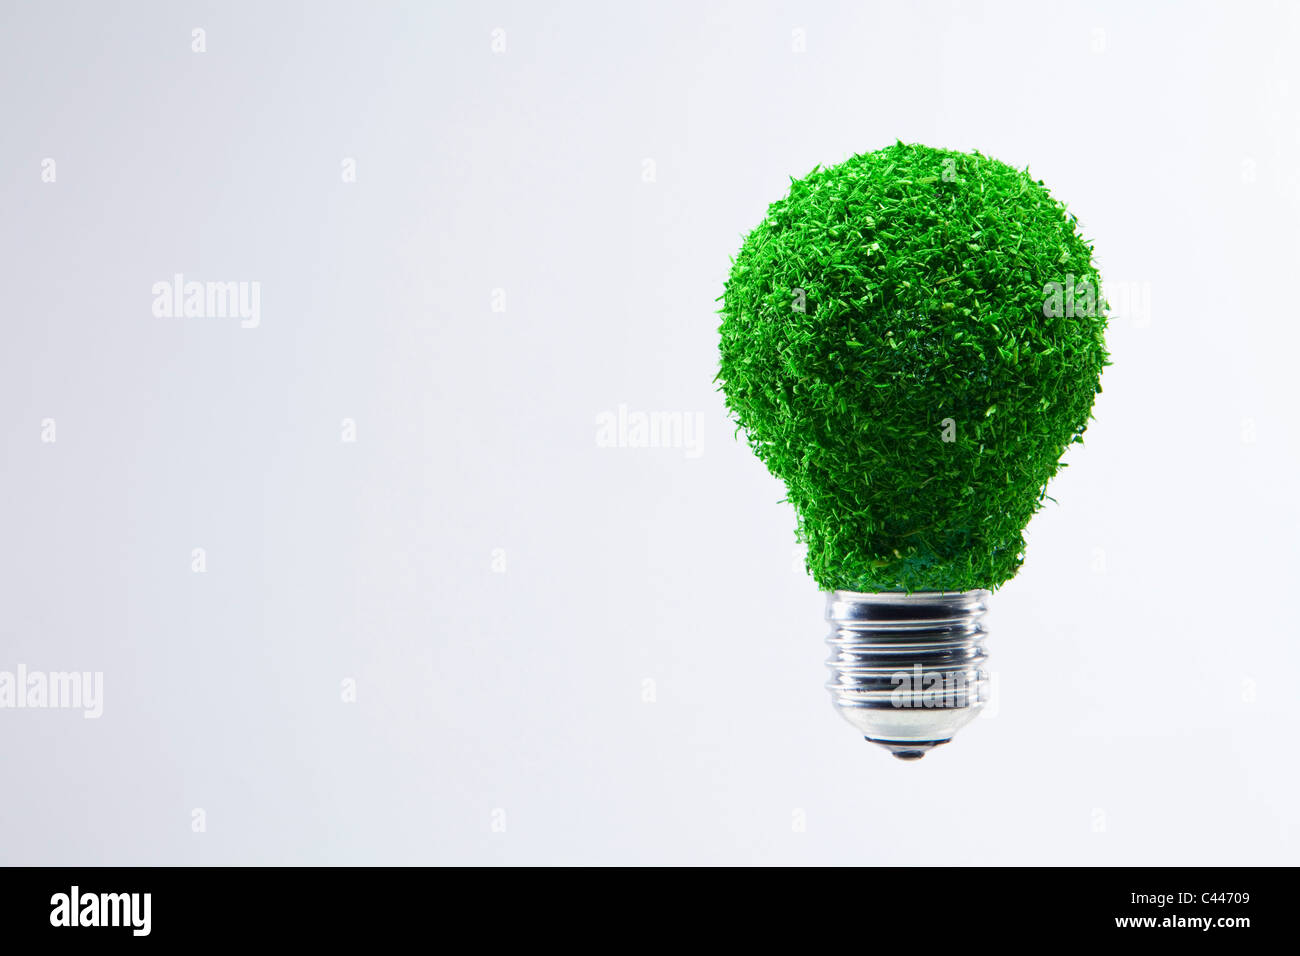 Energiesparlampe in grünen Rasen bedeckt Stockfoto